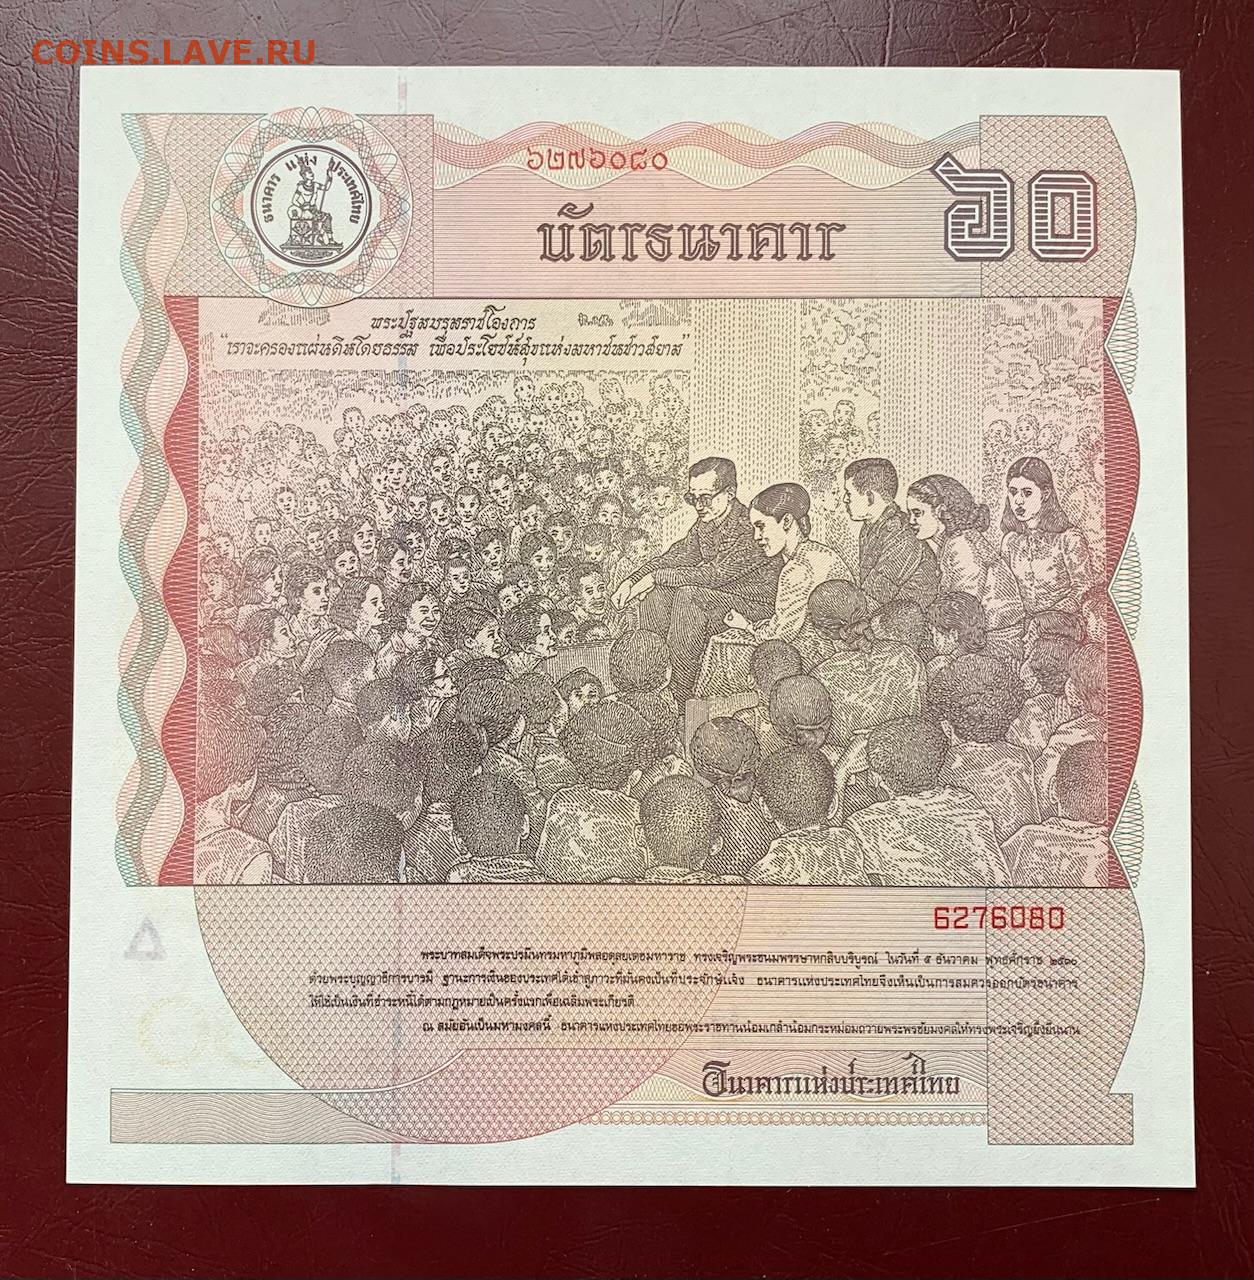 60 бат в рублях. Монета 60 лет. Купюры 60 годов. Таиланд банкнота 1956 10 бат рама IX. 60 Батов в рублях.